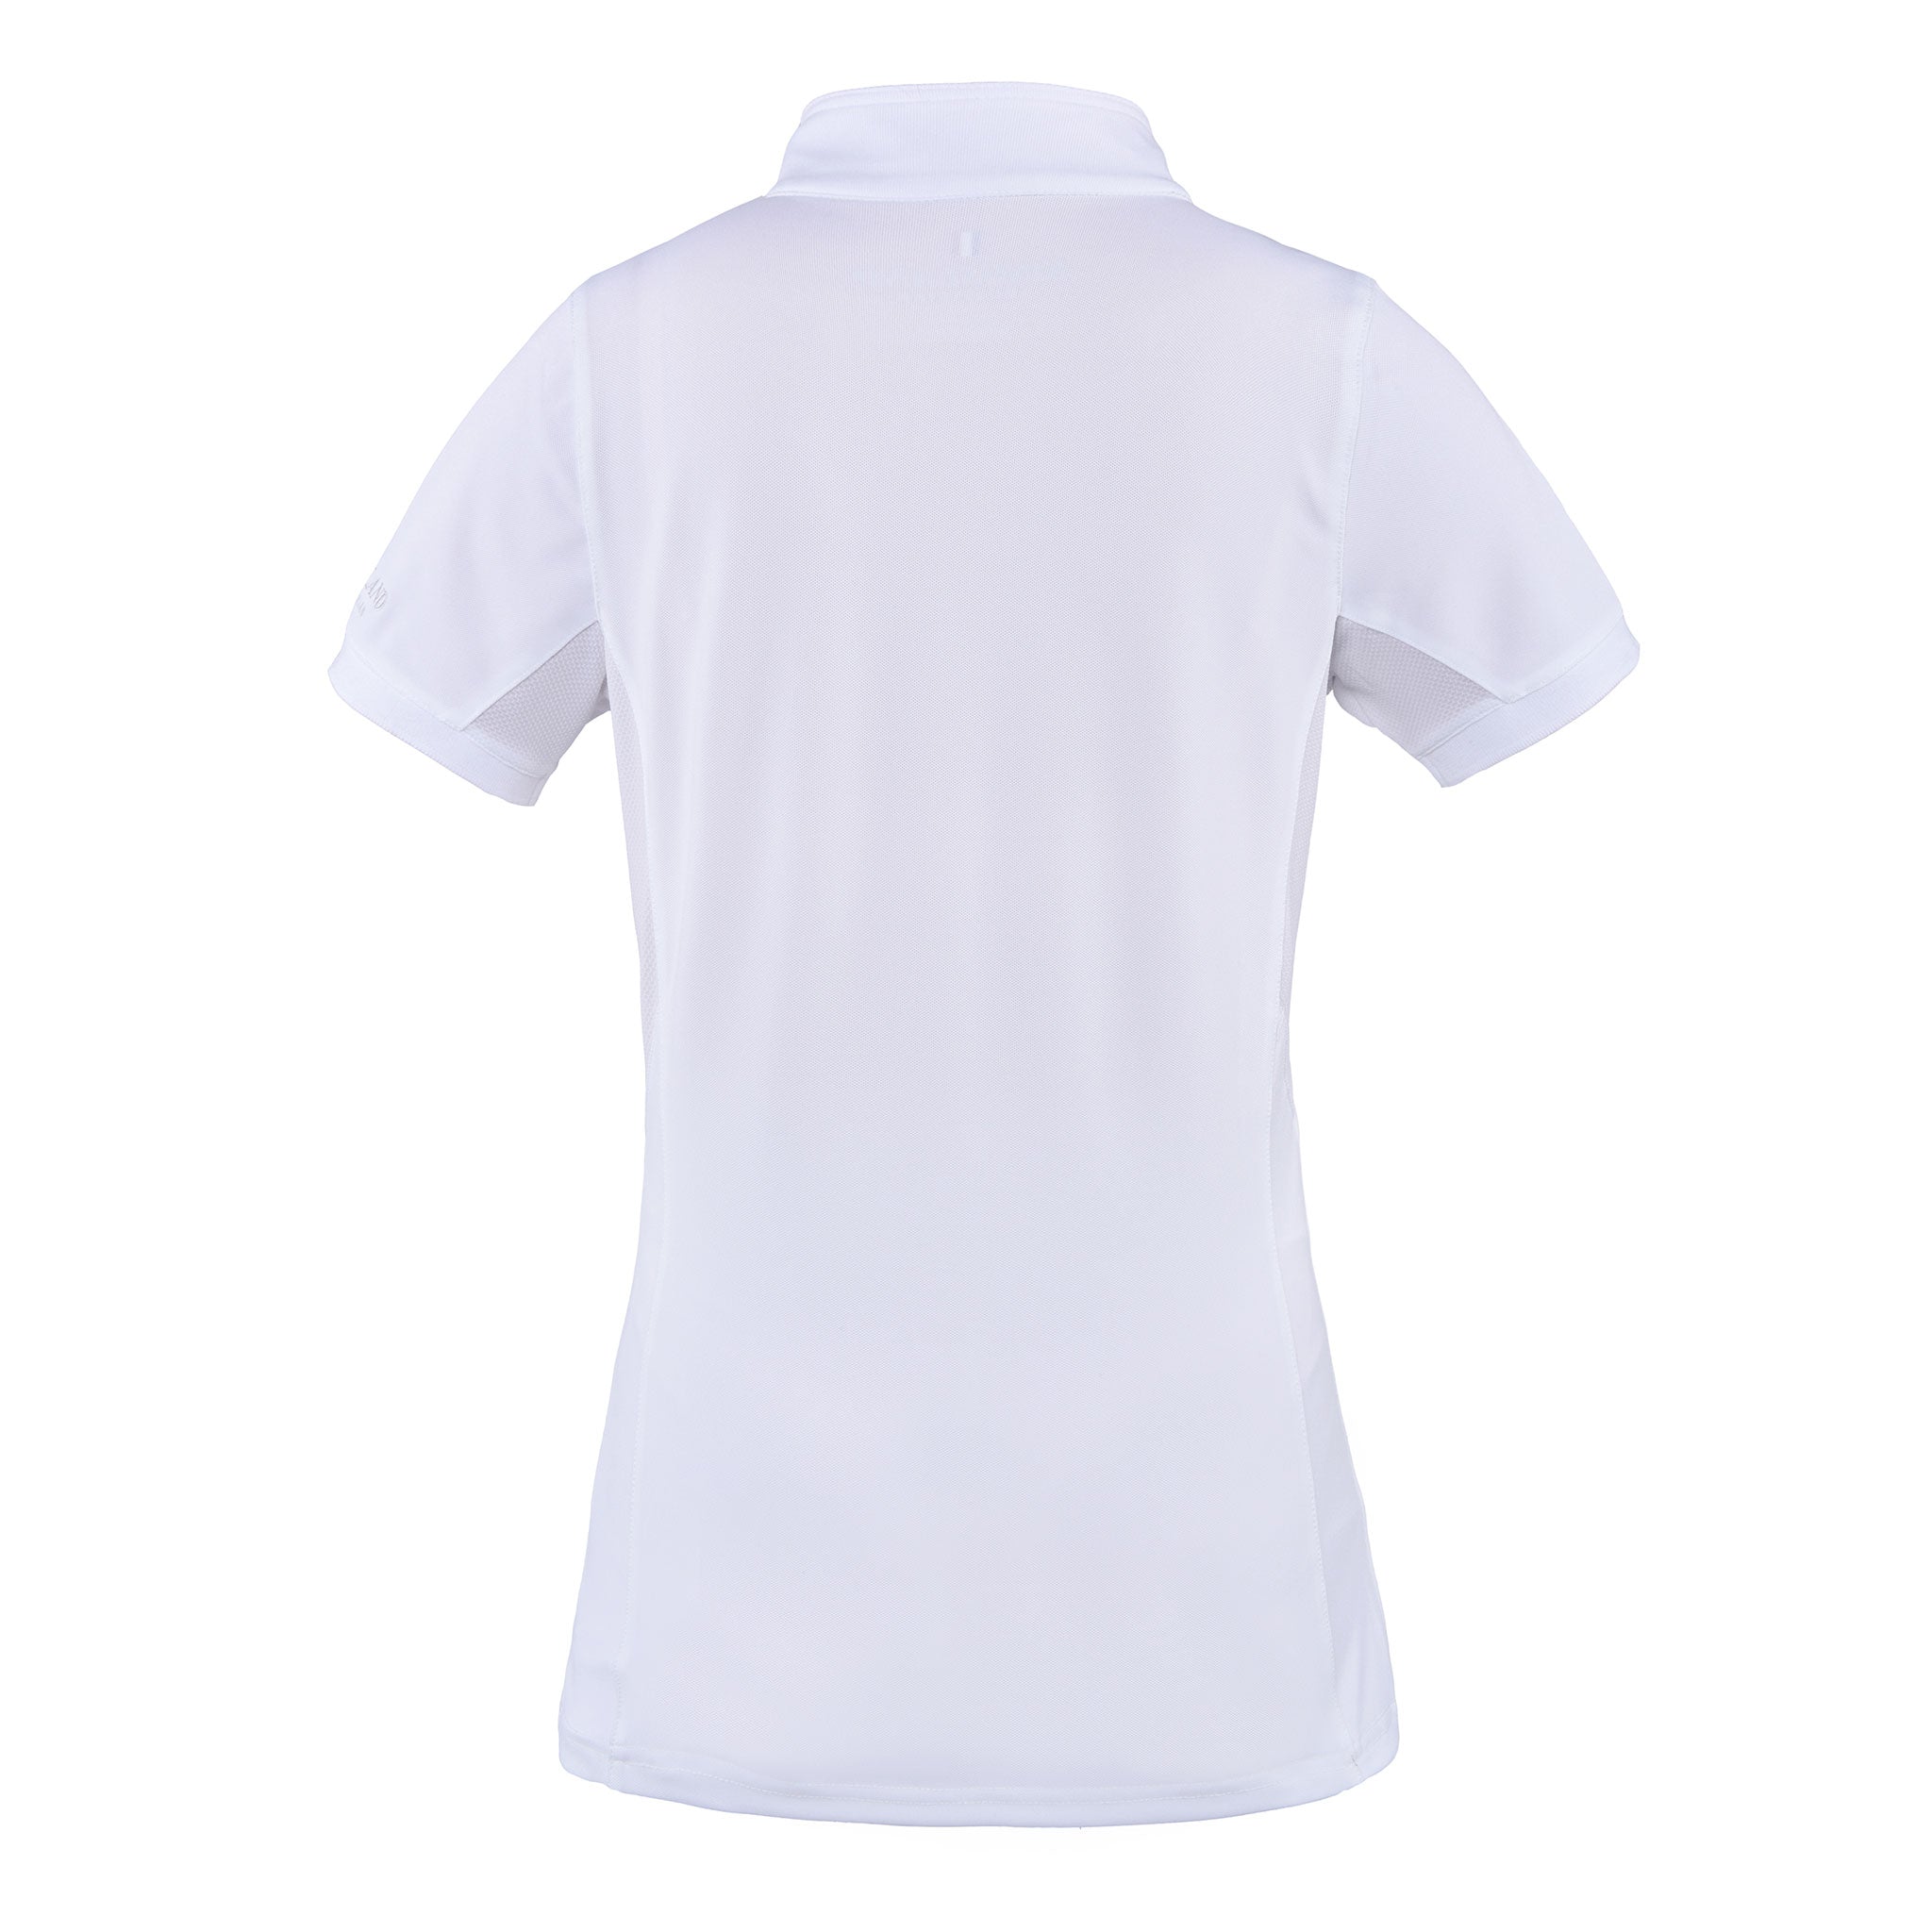 Kingsland Classic Ladies Show Shirt Short Sleeve